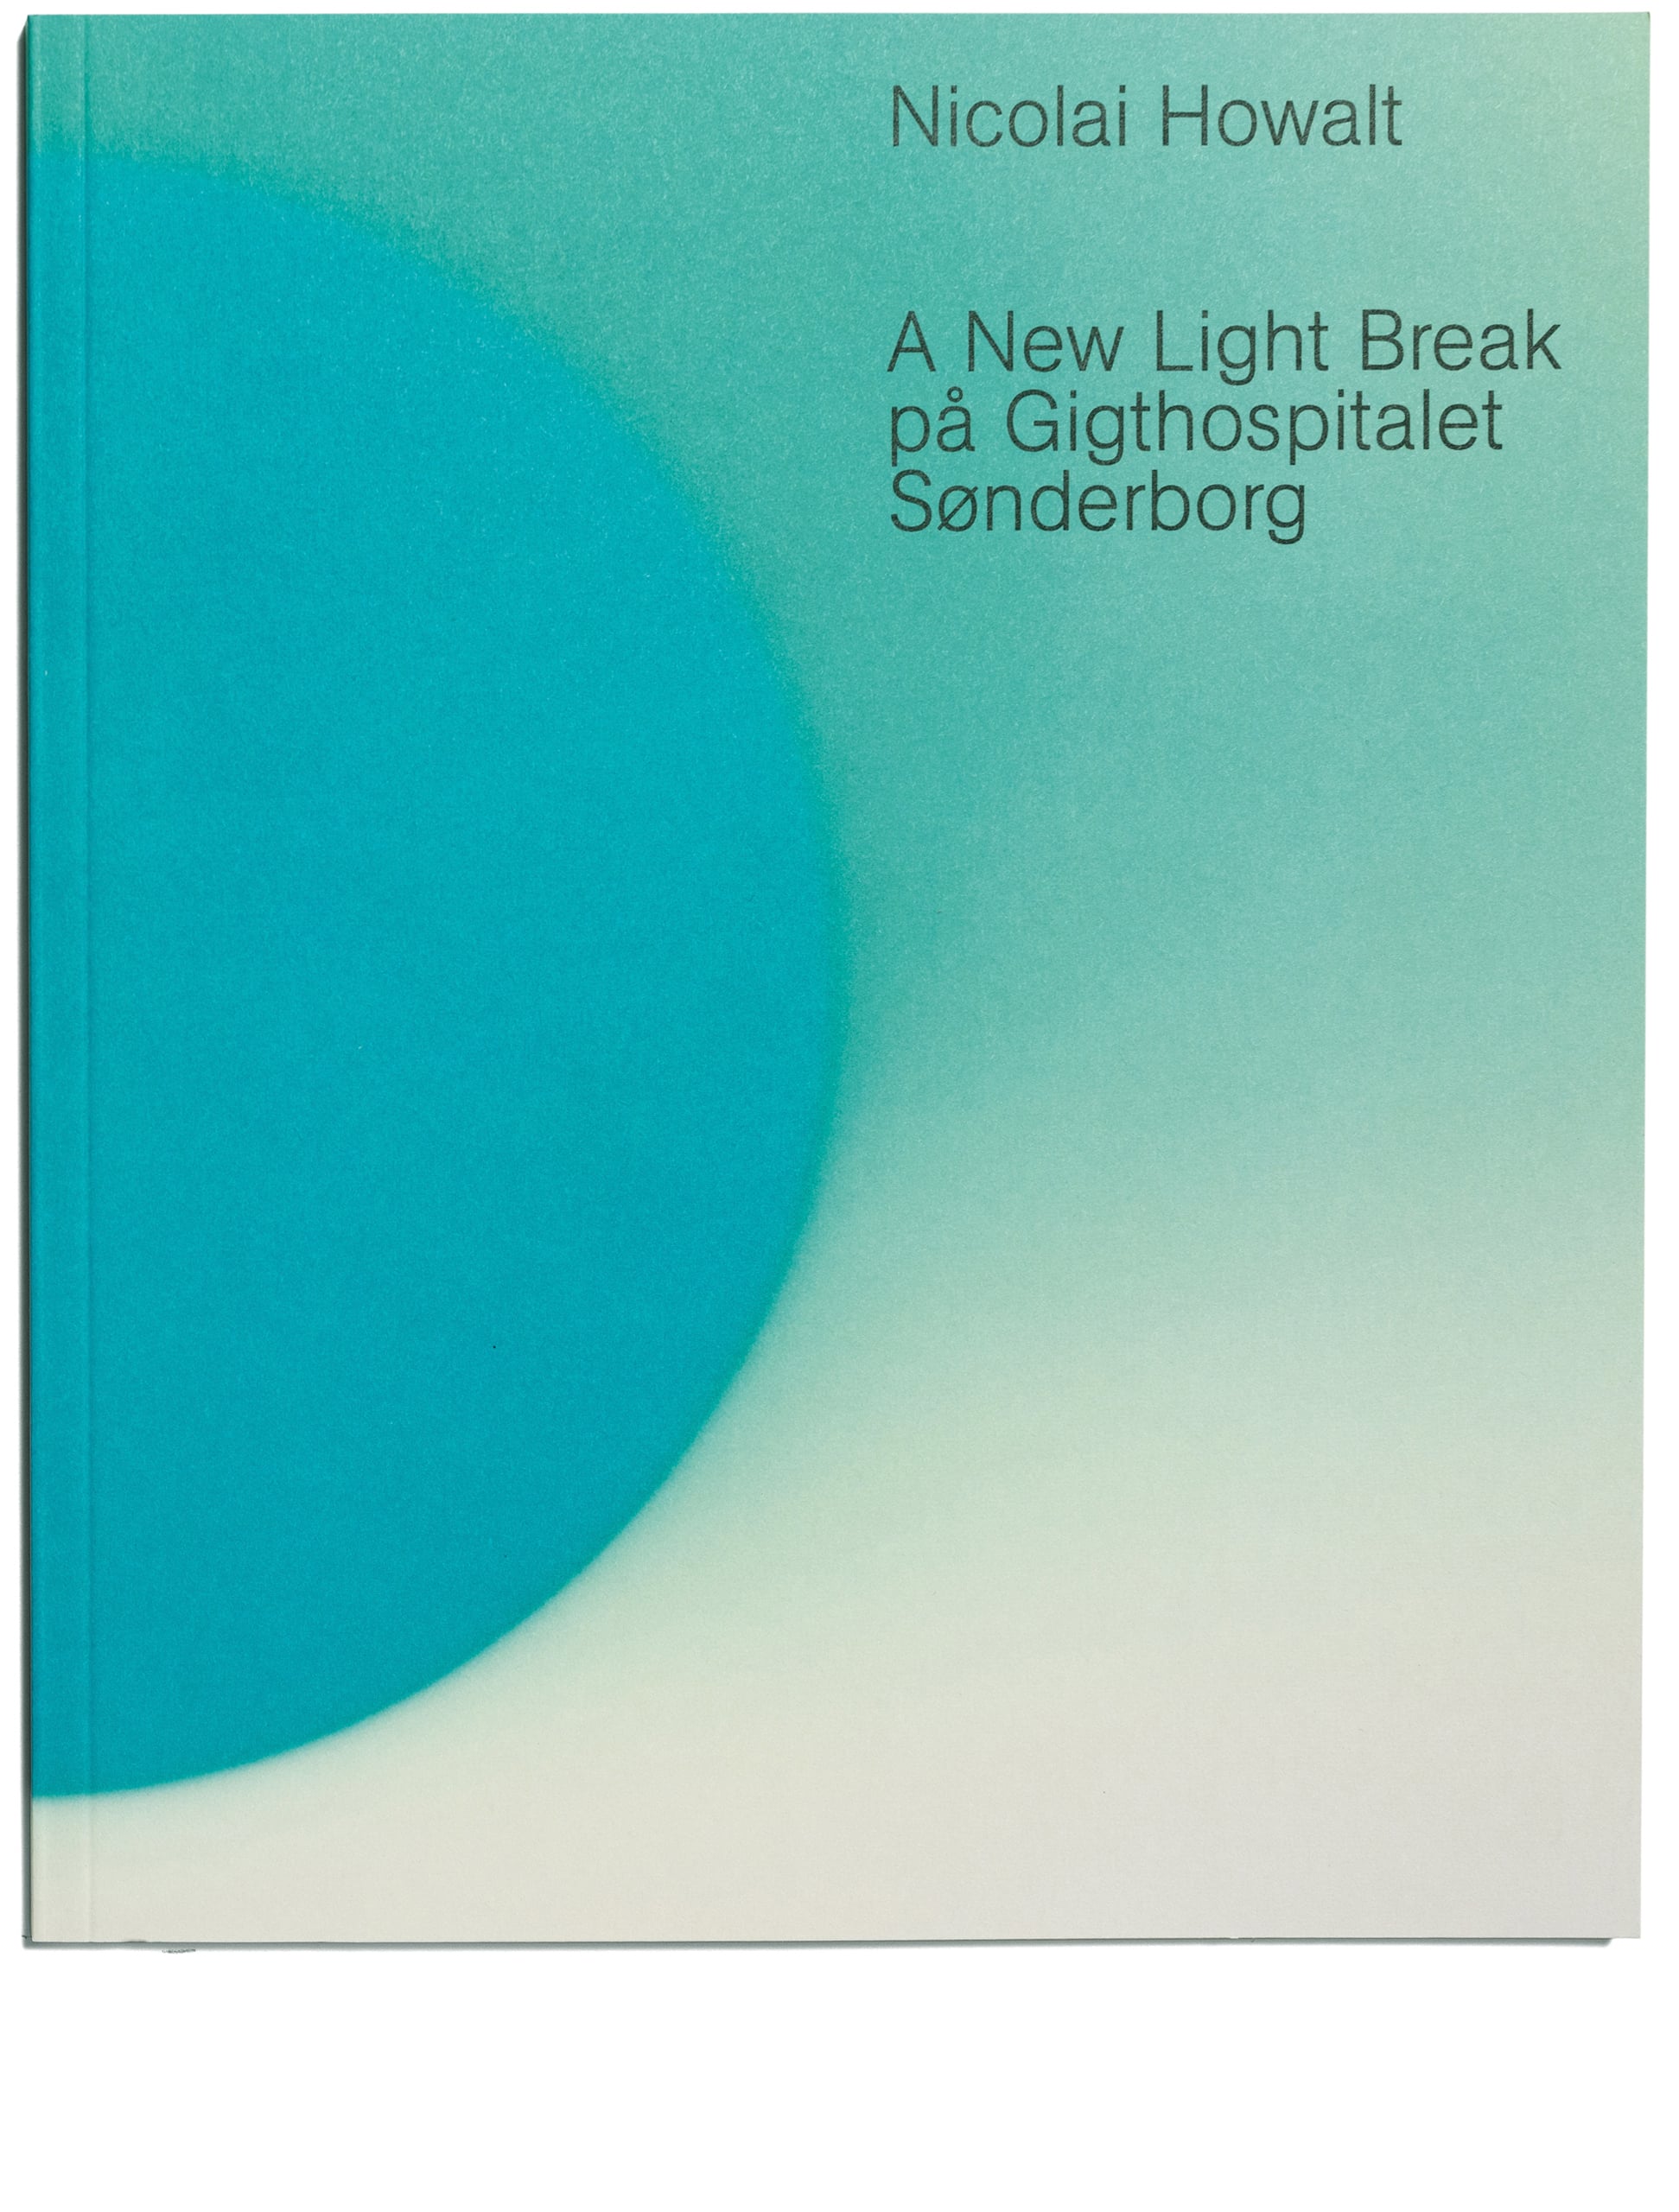 Booklet - A new Light Break - by Nicolai Howalt